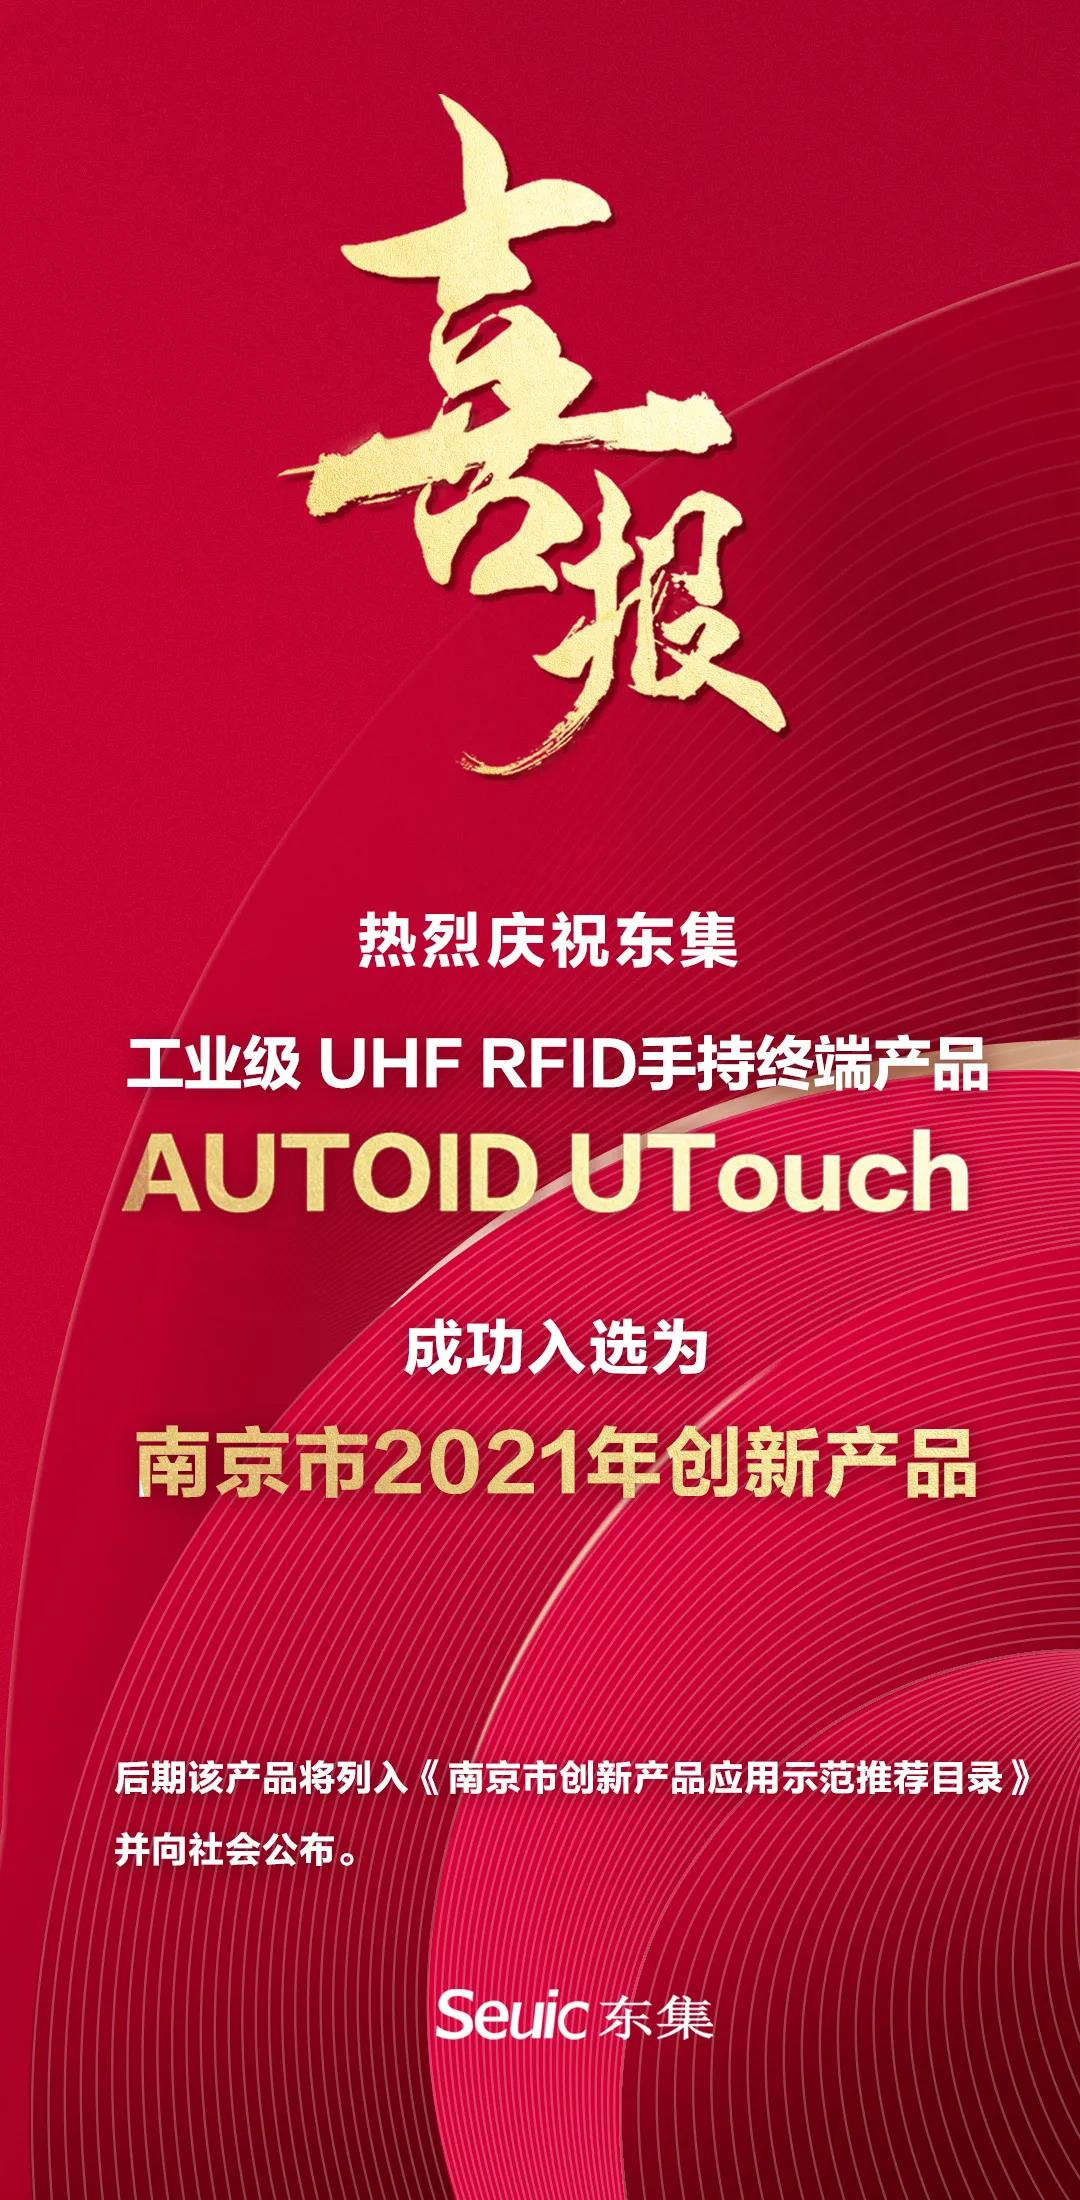 AUTOID UTouch入选南京市2021年创新产品